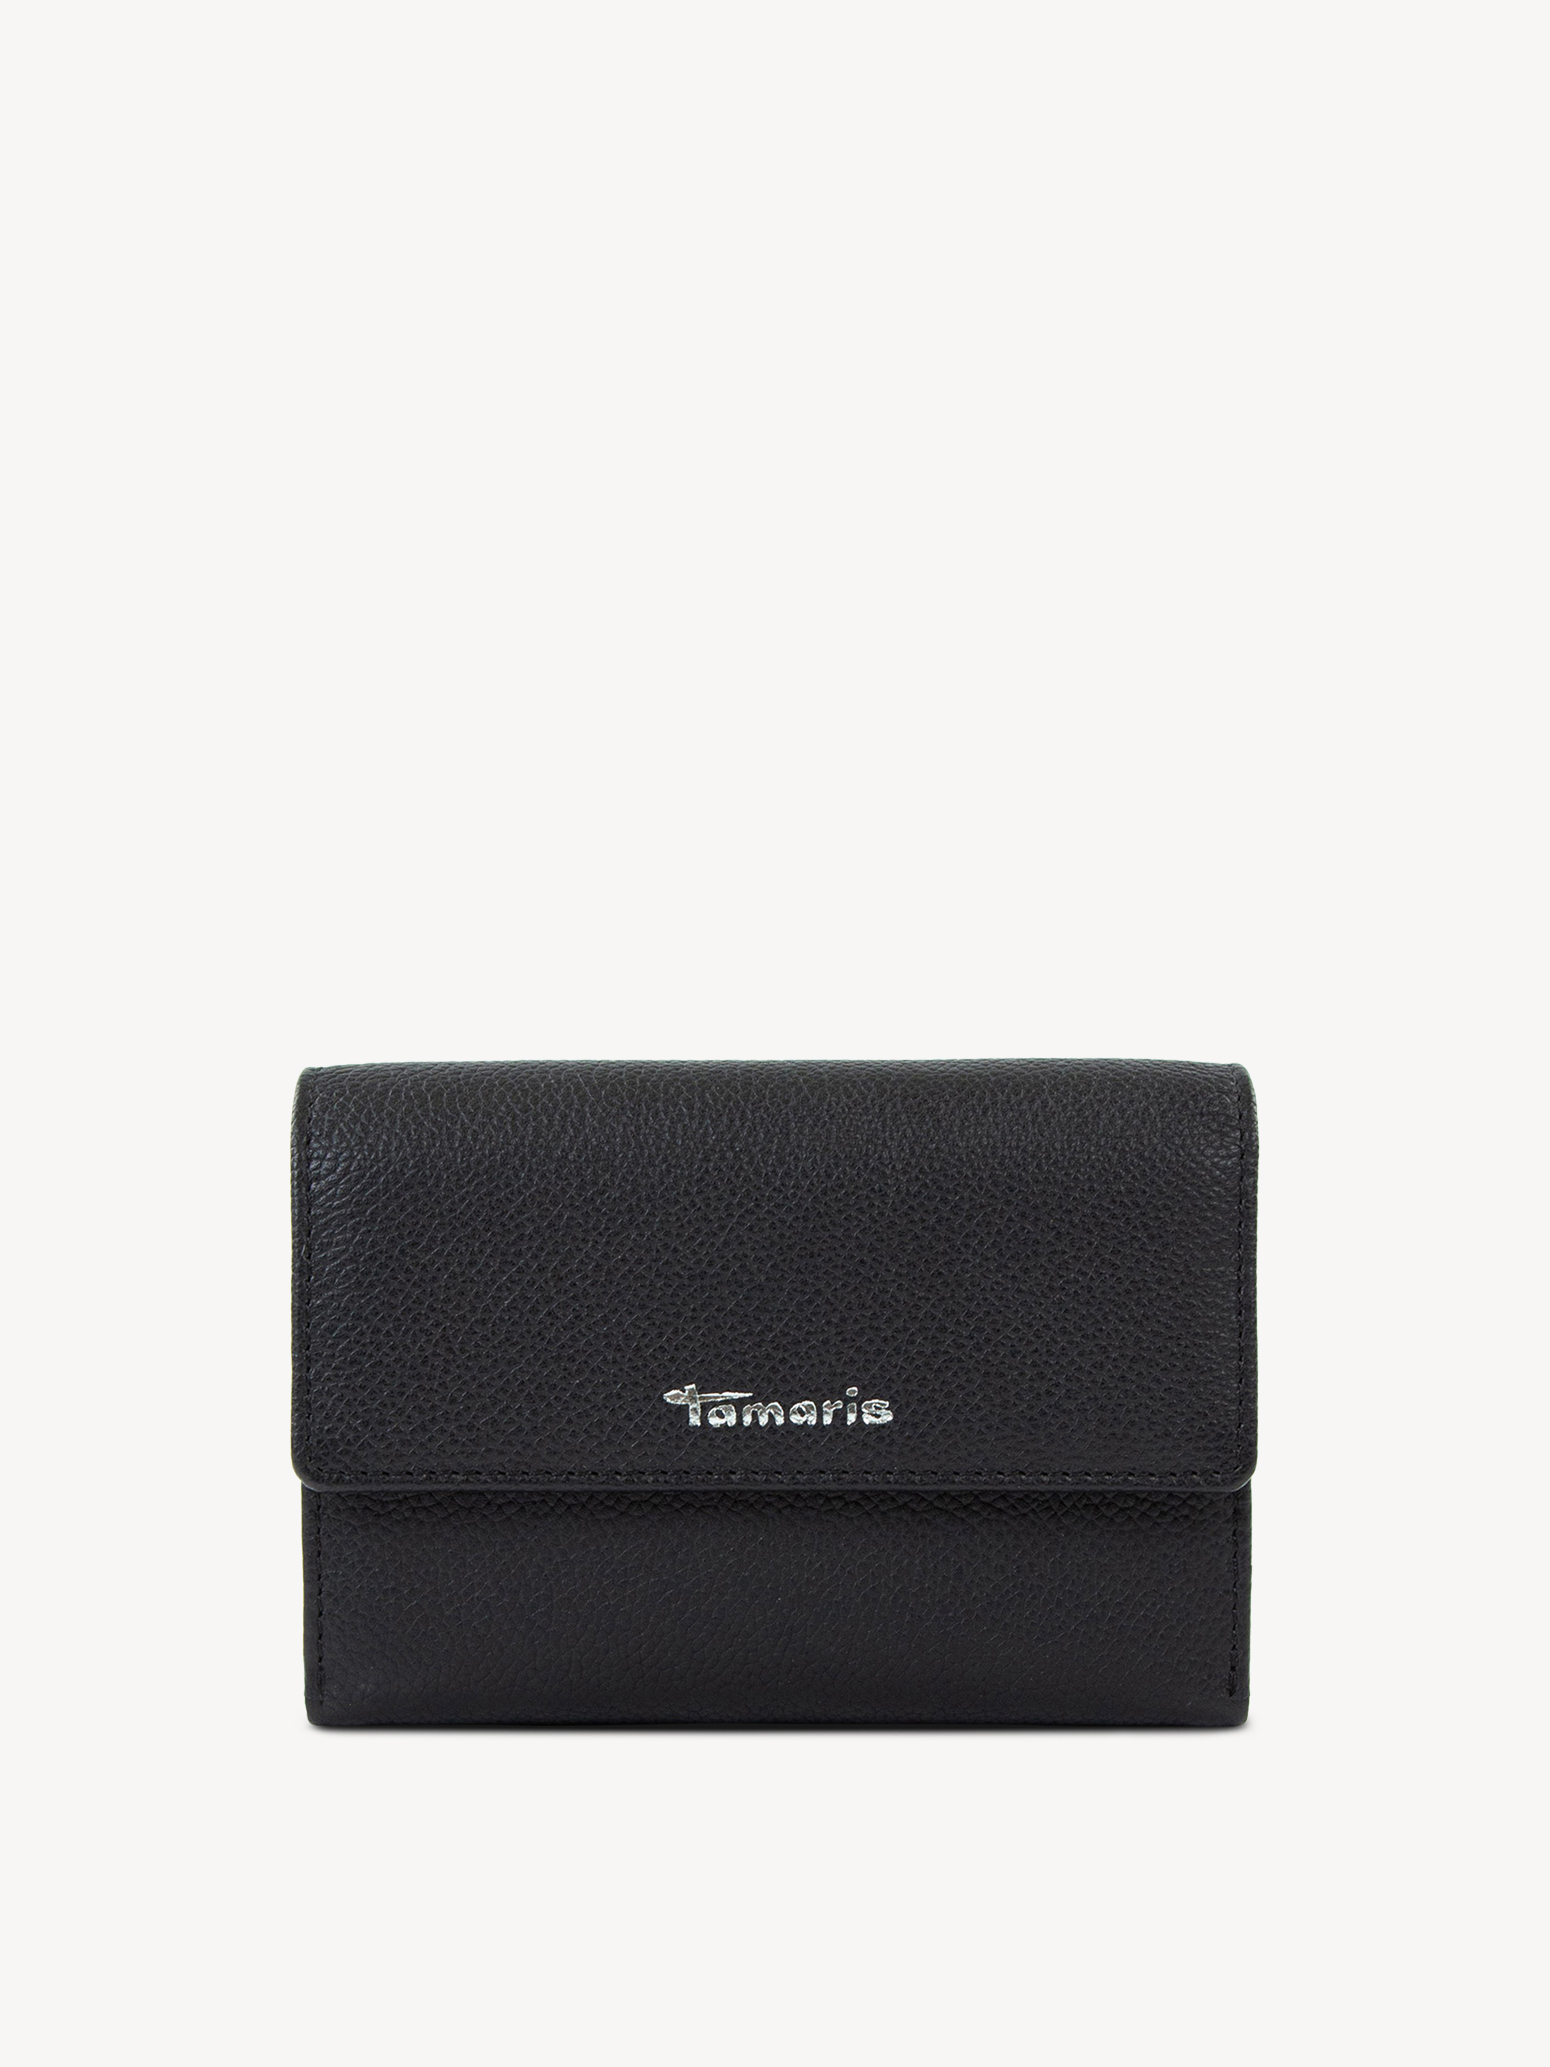 Leather Wallet - black